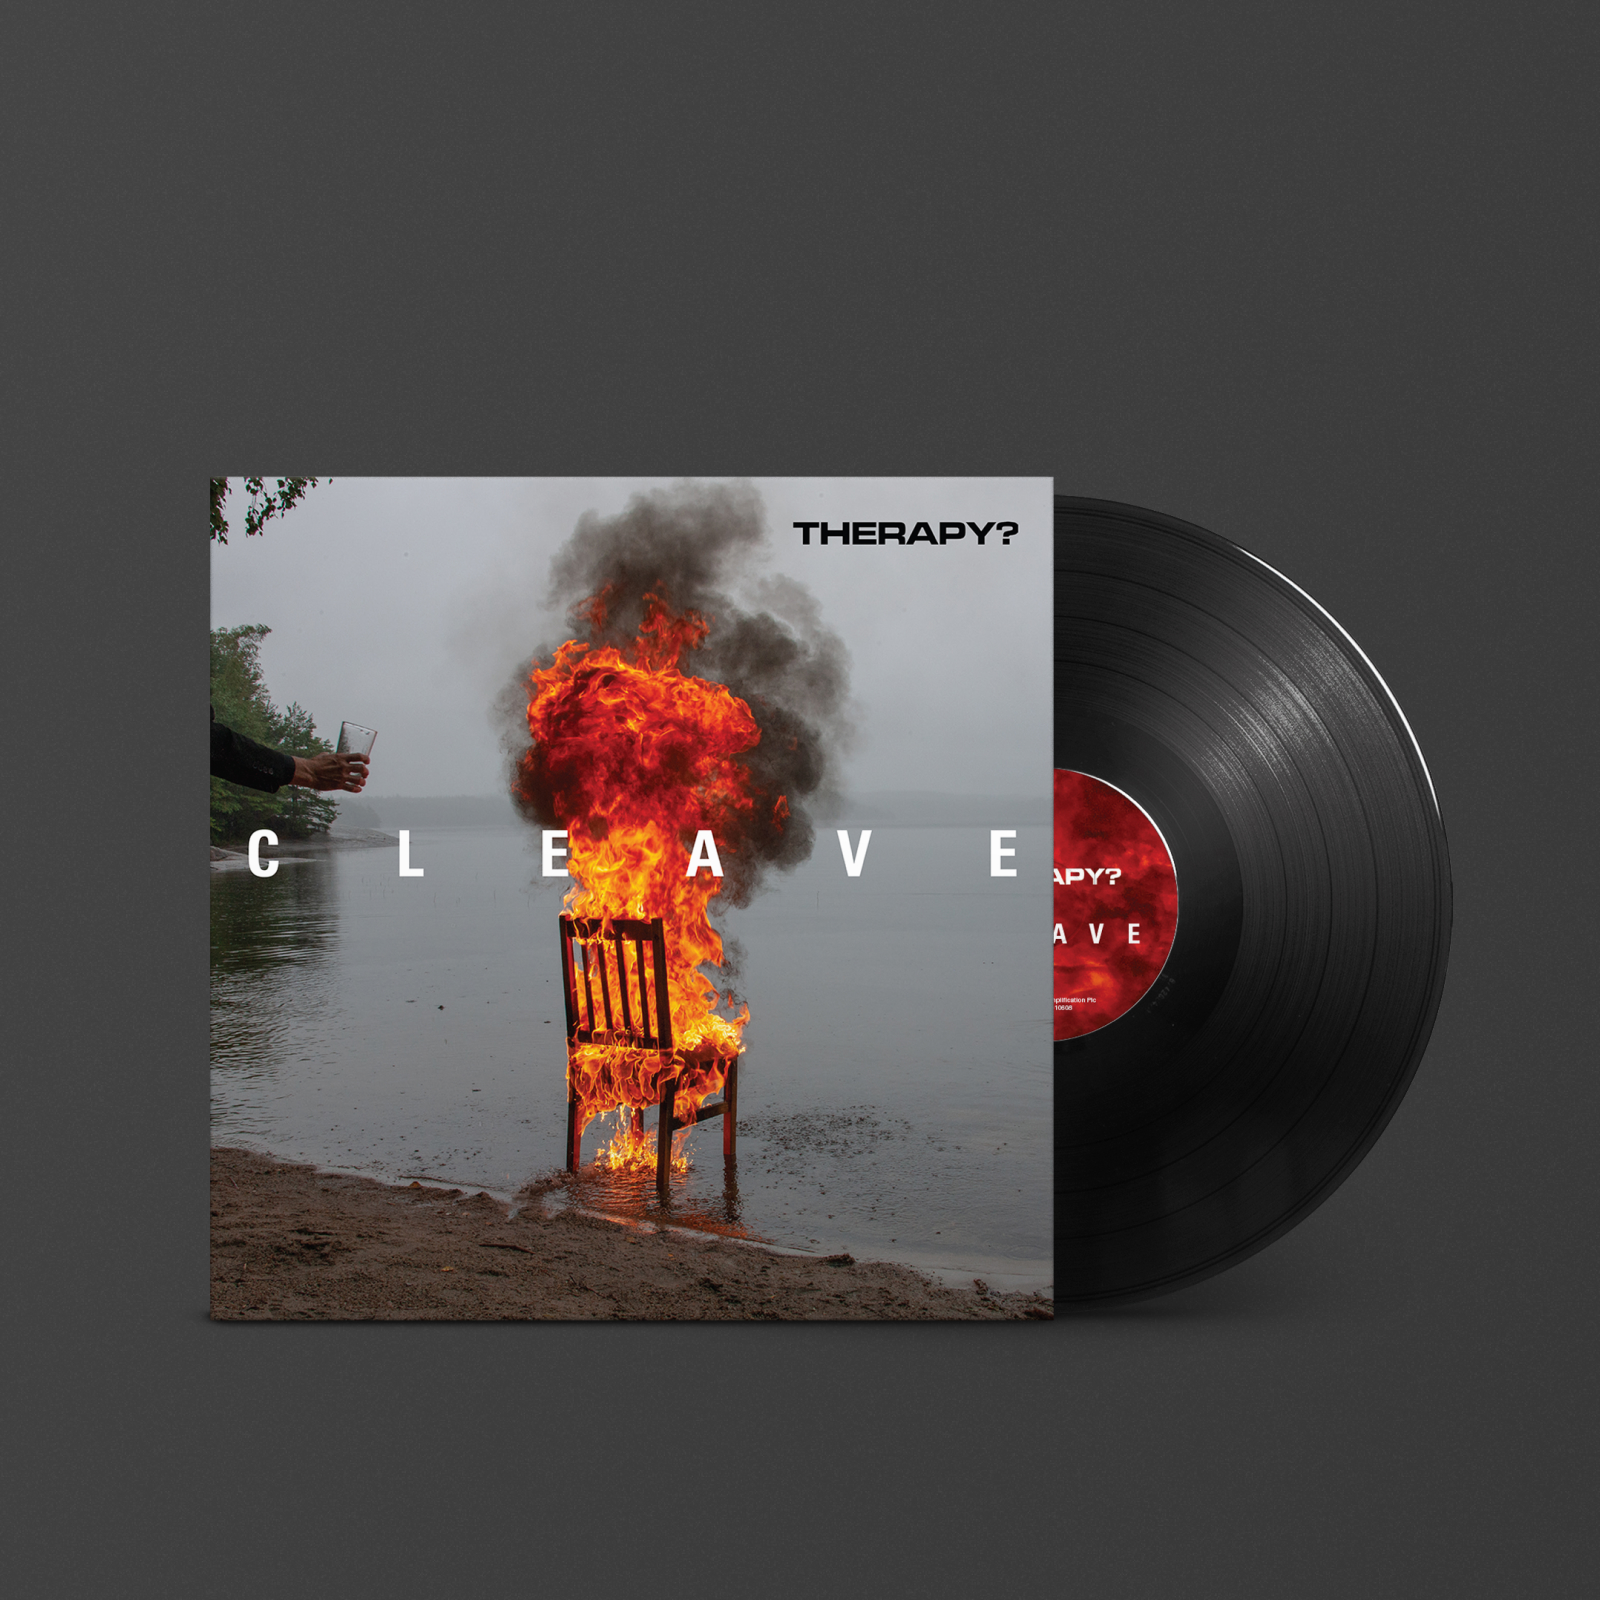 Cleave Therapy LP의 LP 커버.